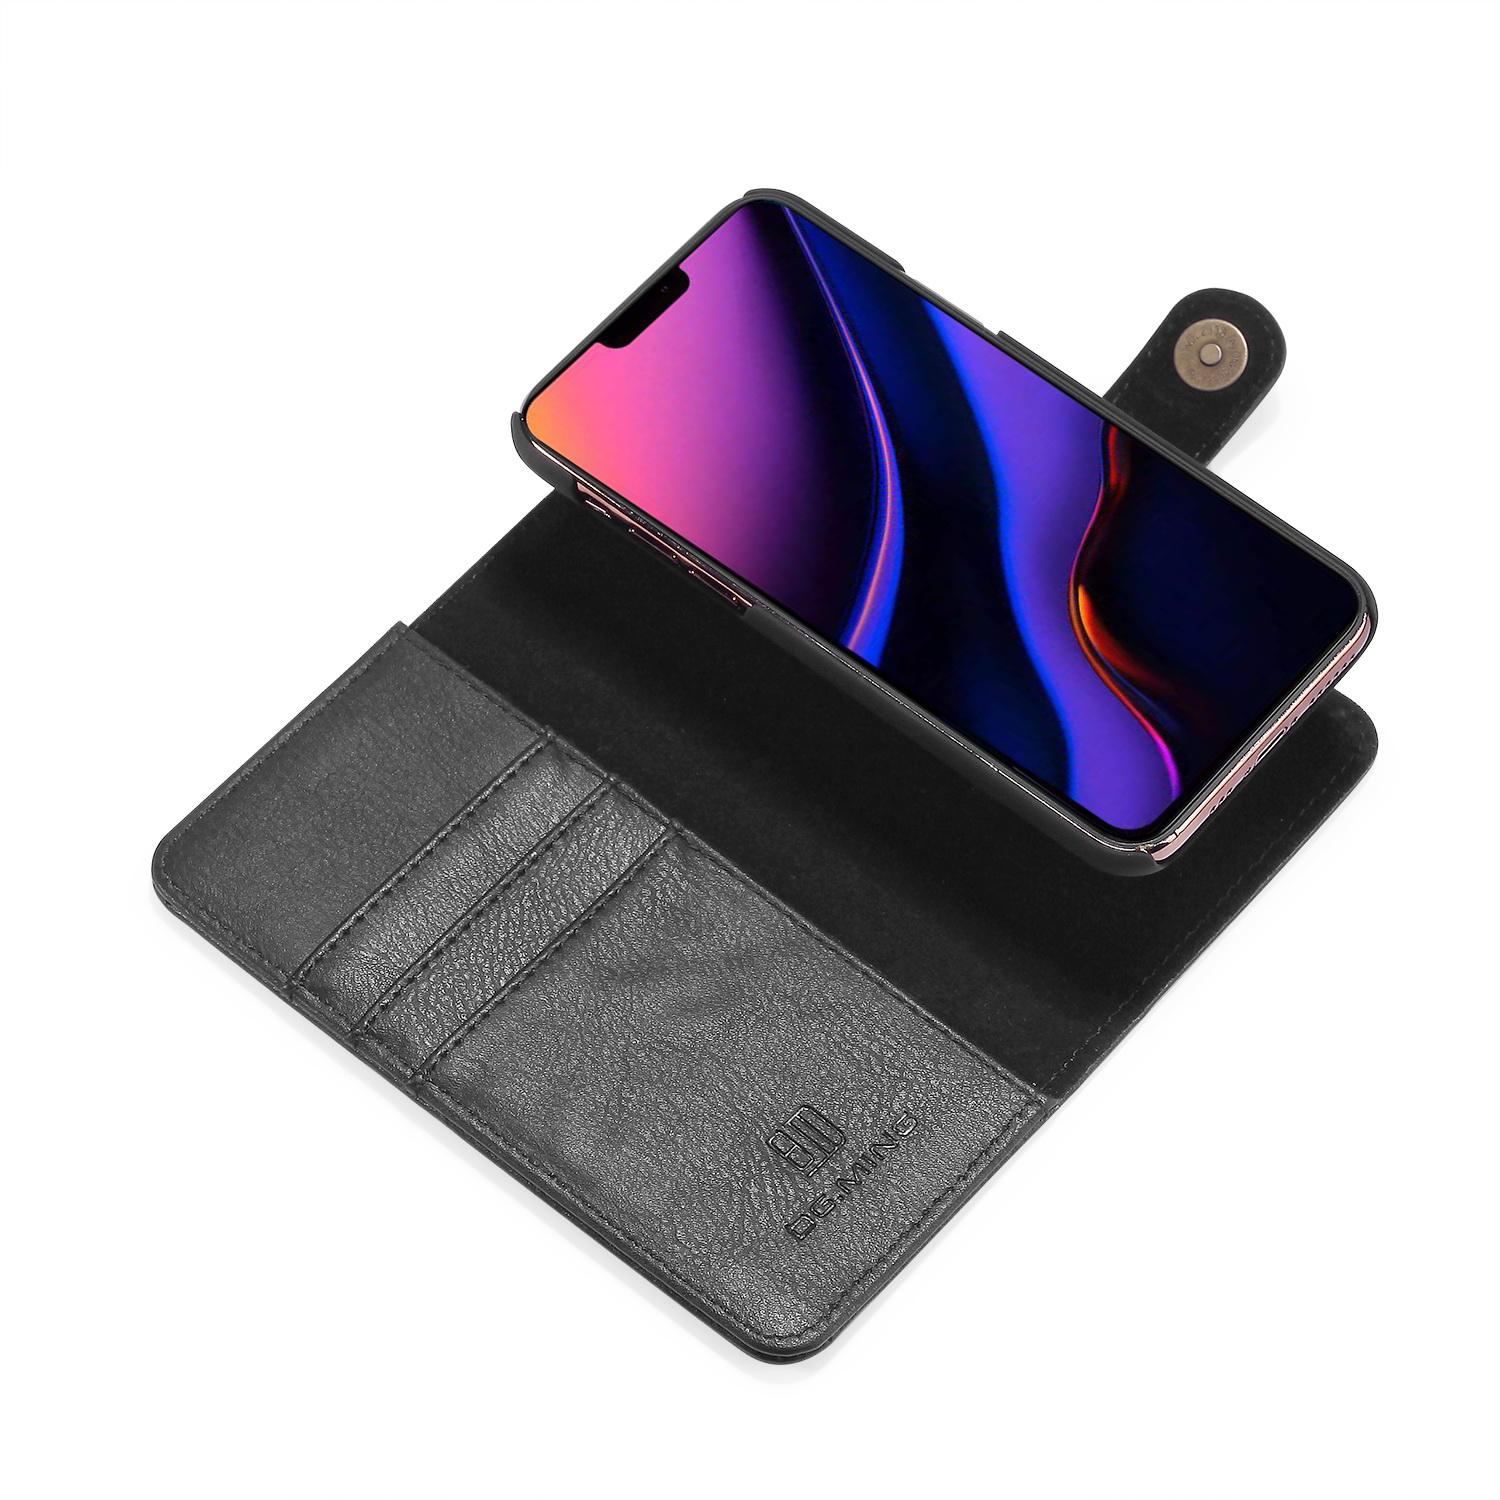 iPhone 11 Pro Max Plånboksfodral med avtagbart skal, svart